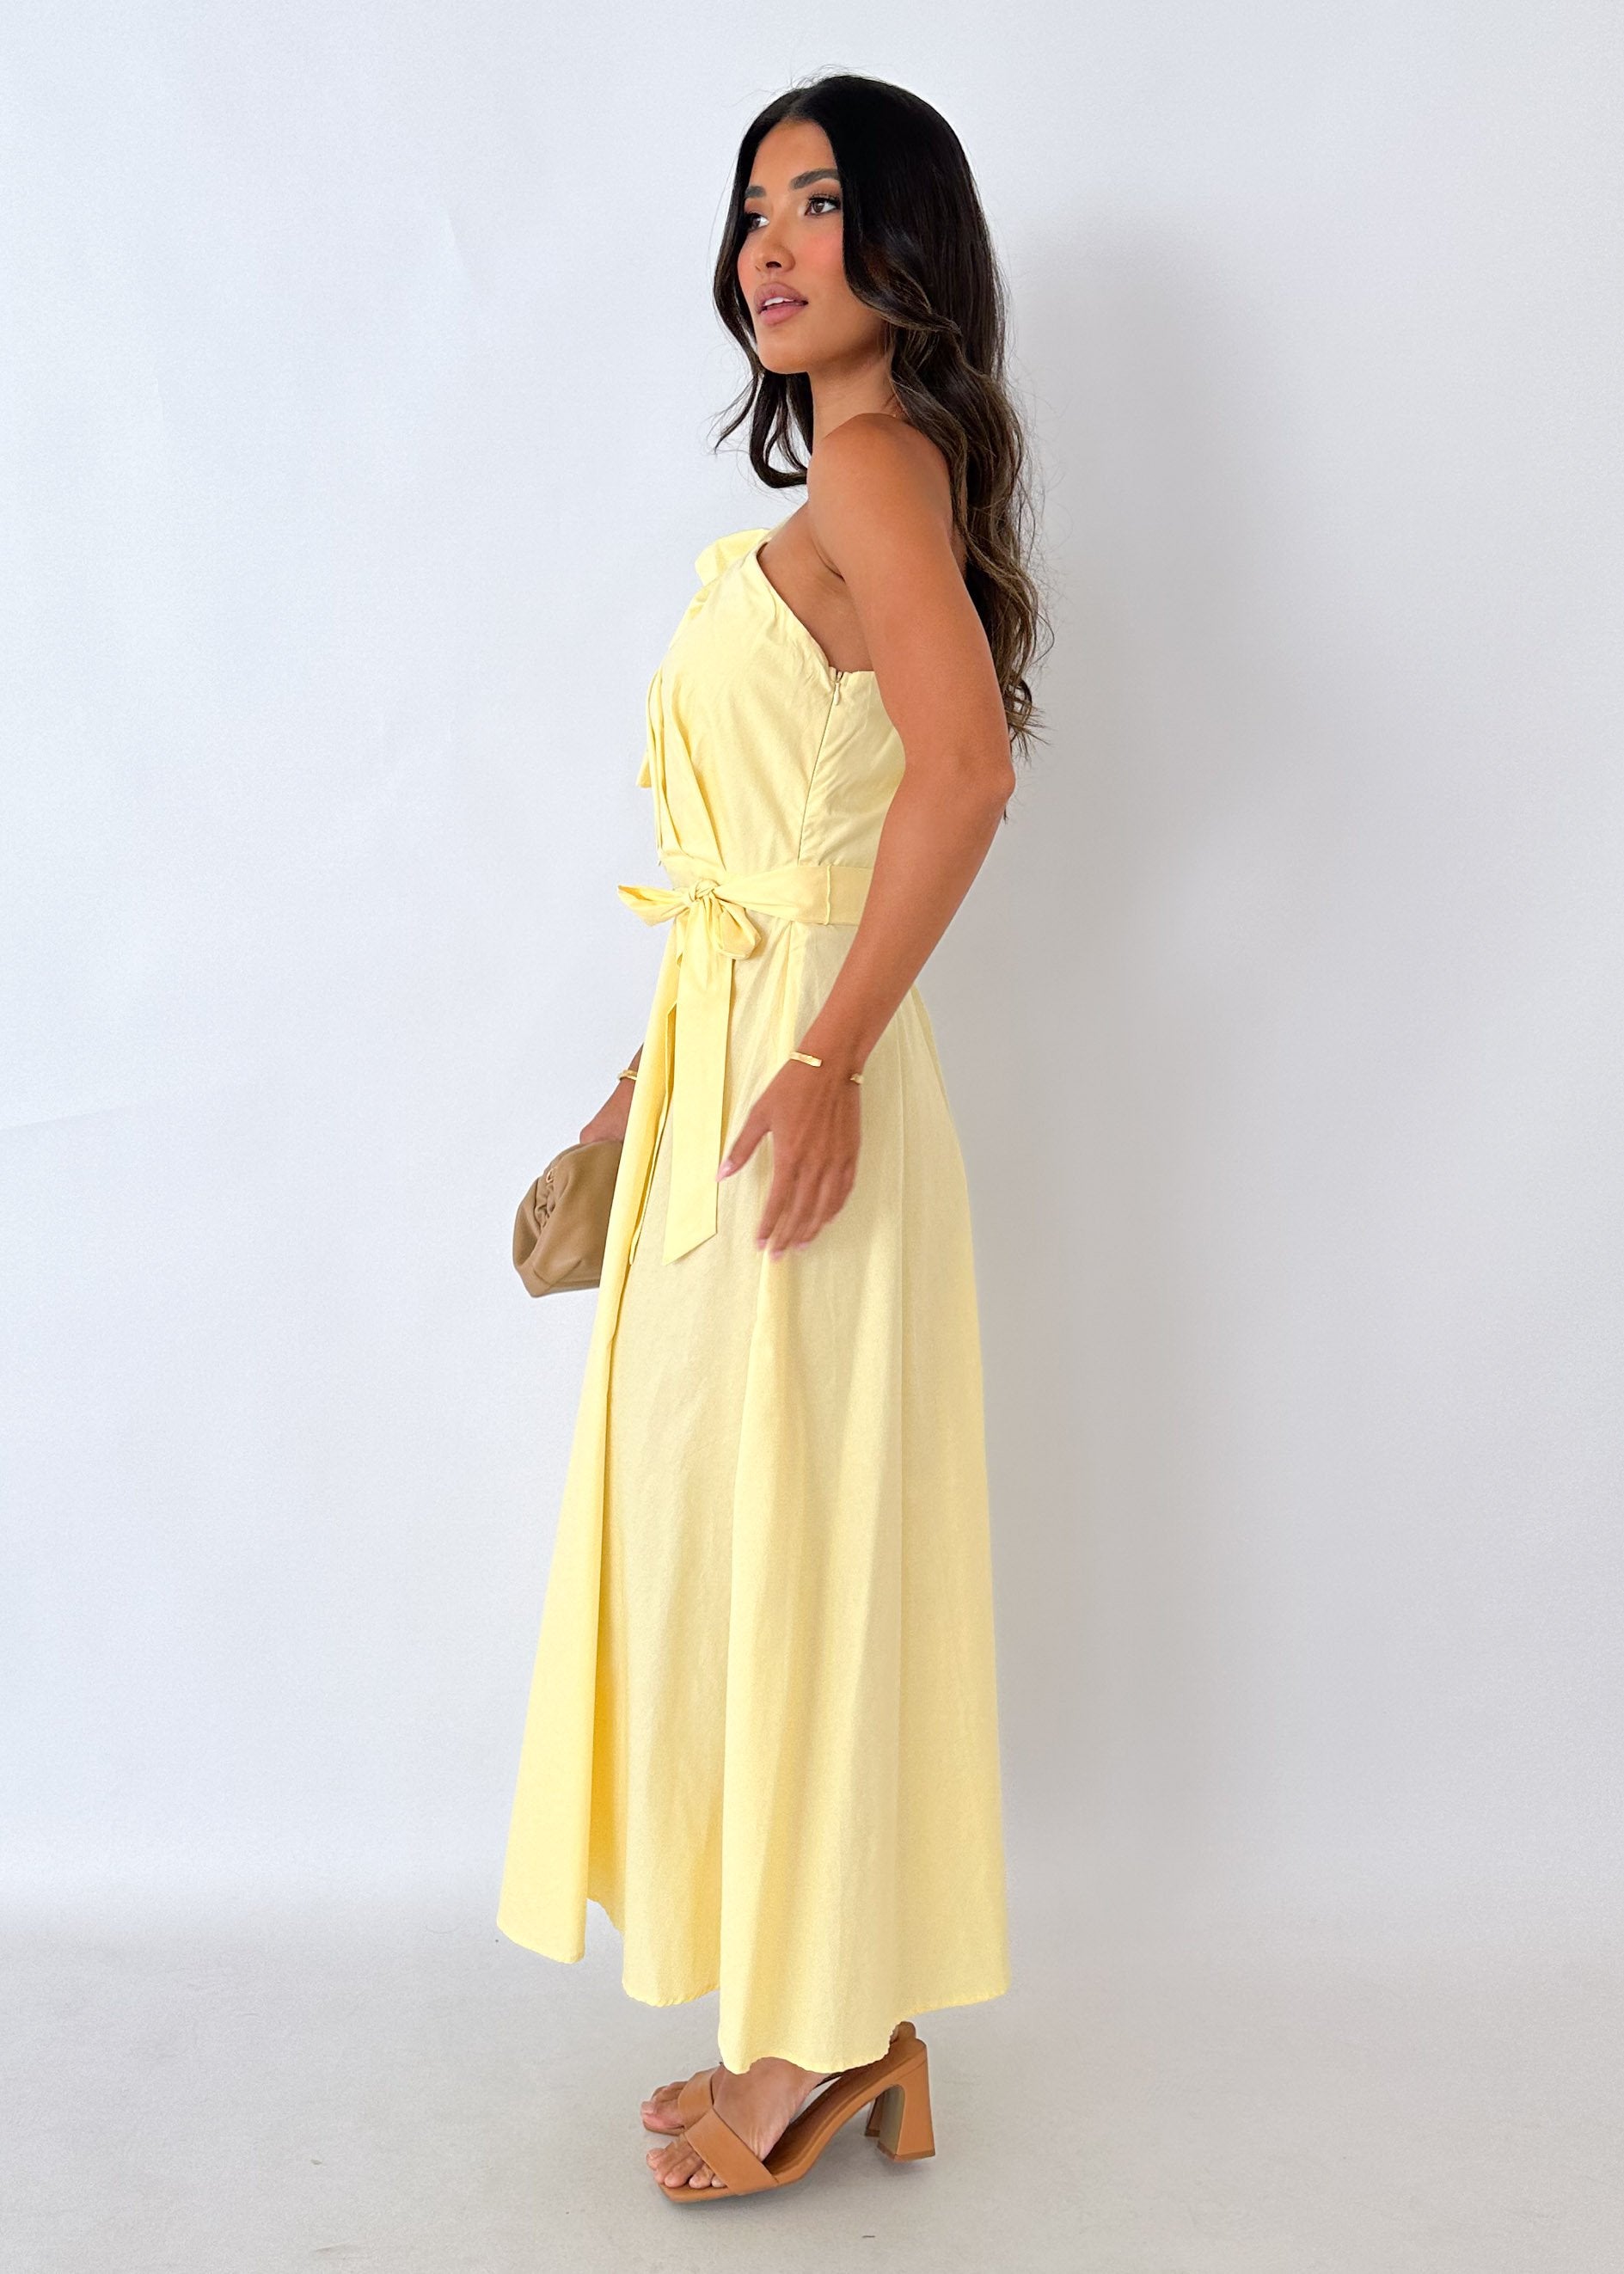 Rowler One Shoulder Midi Dress - Lemon